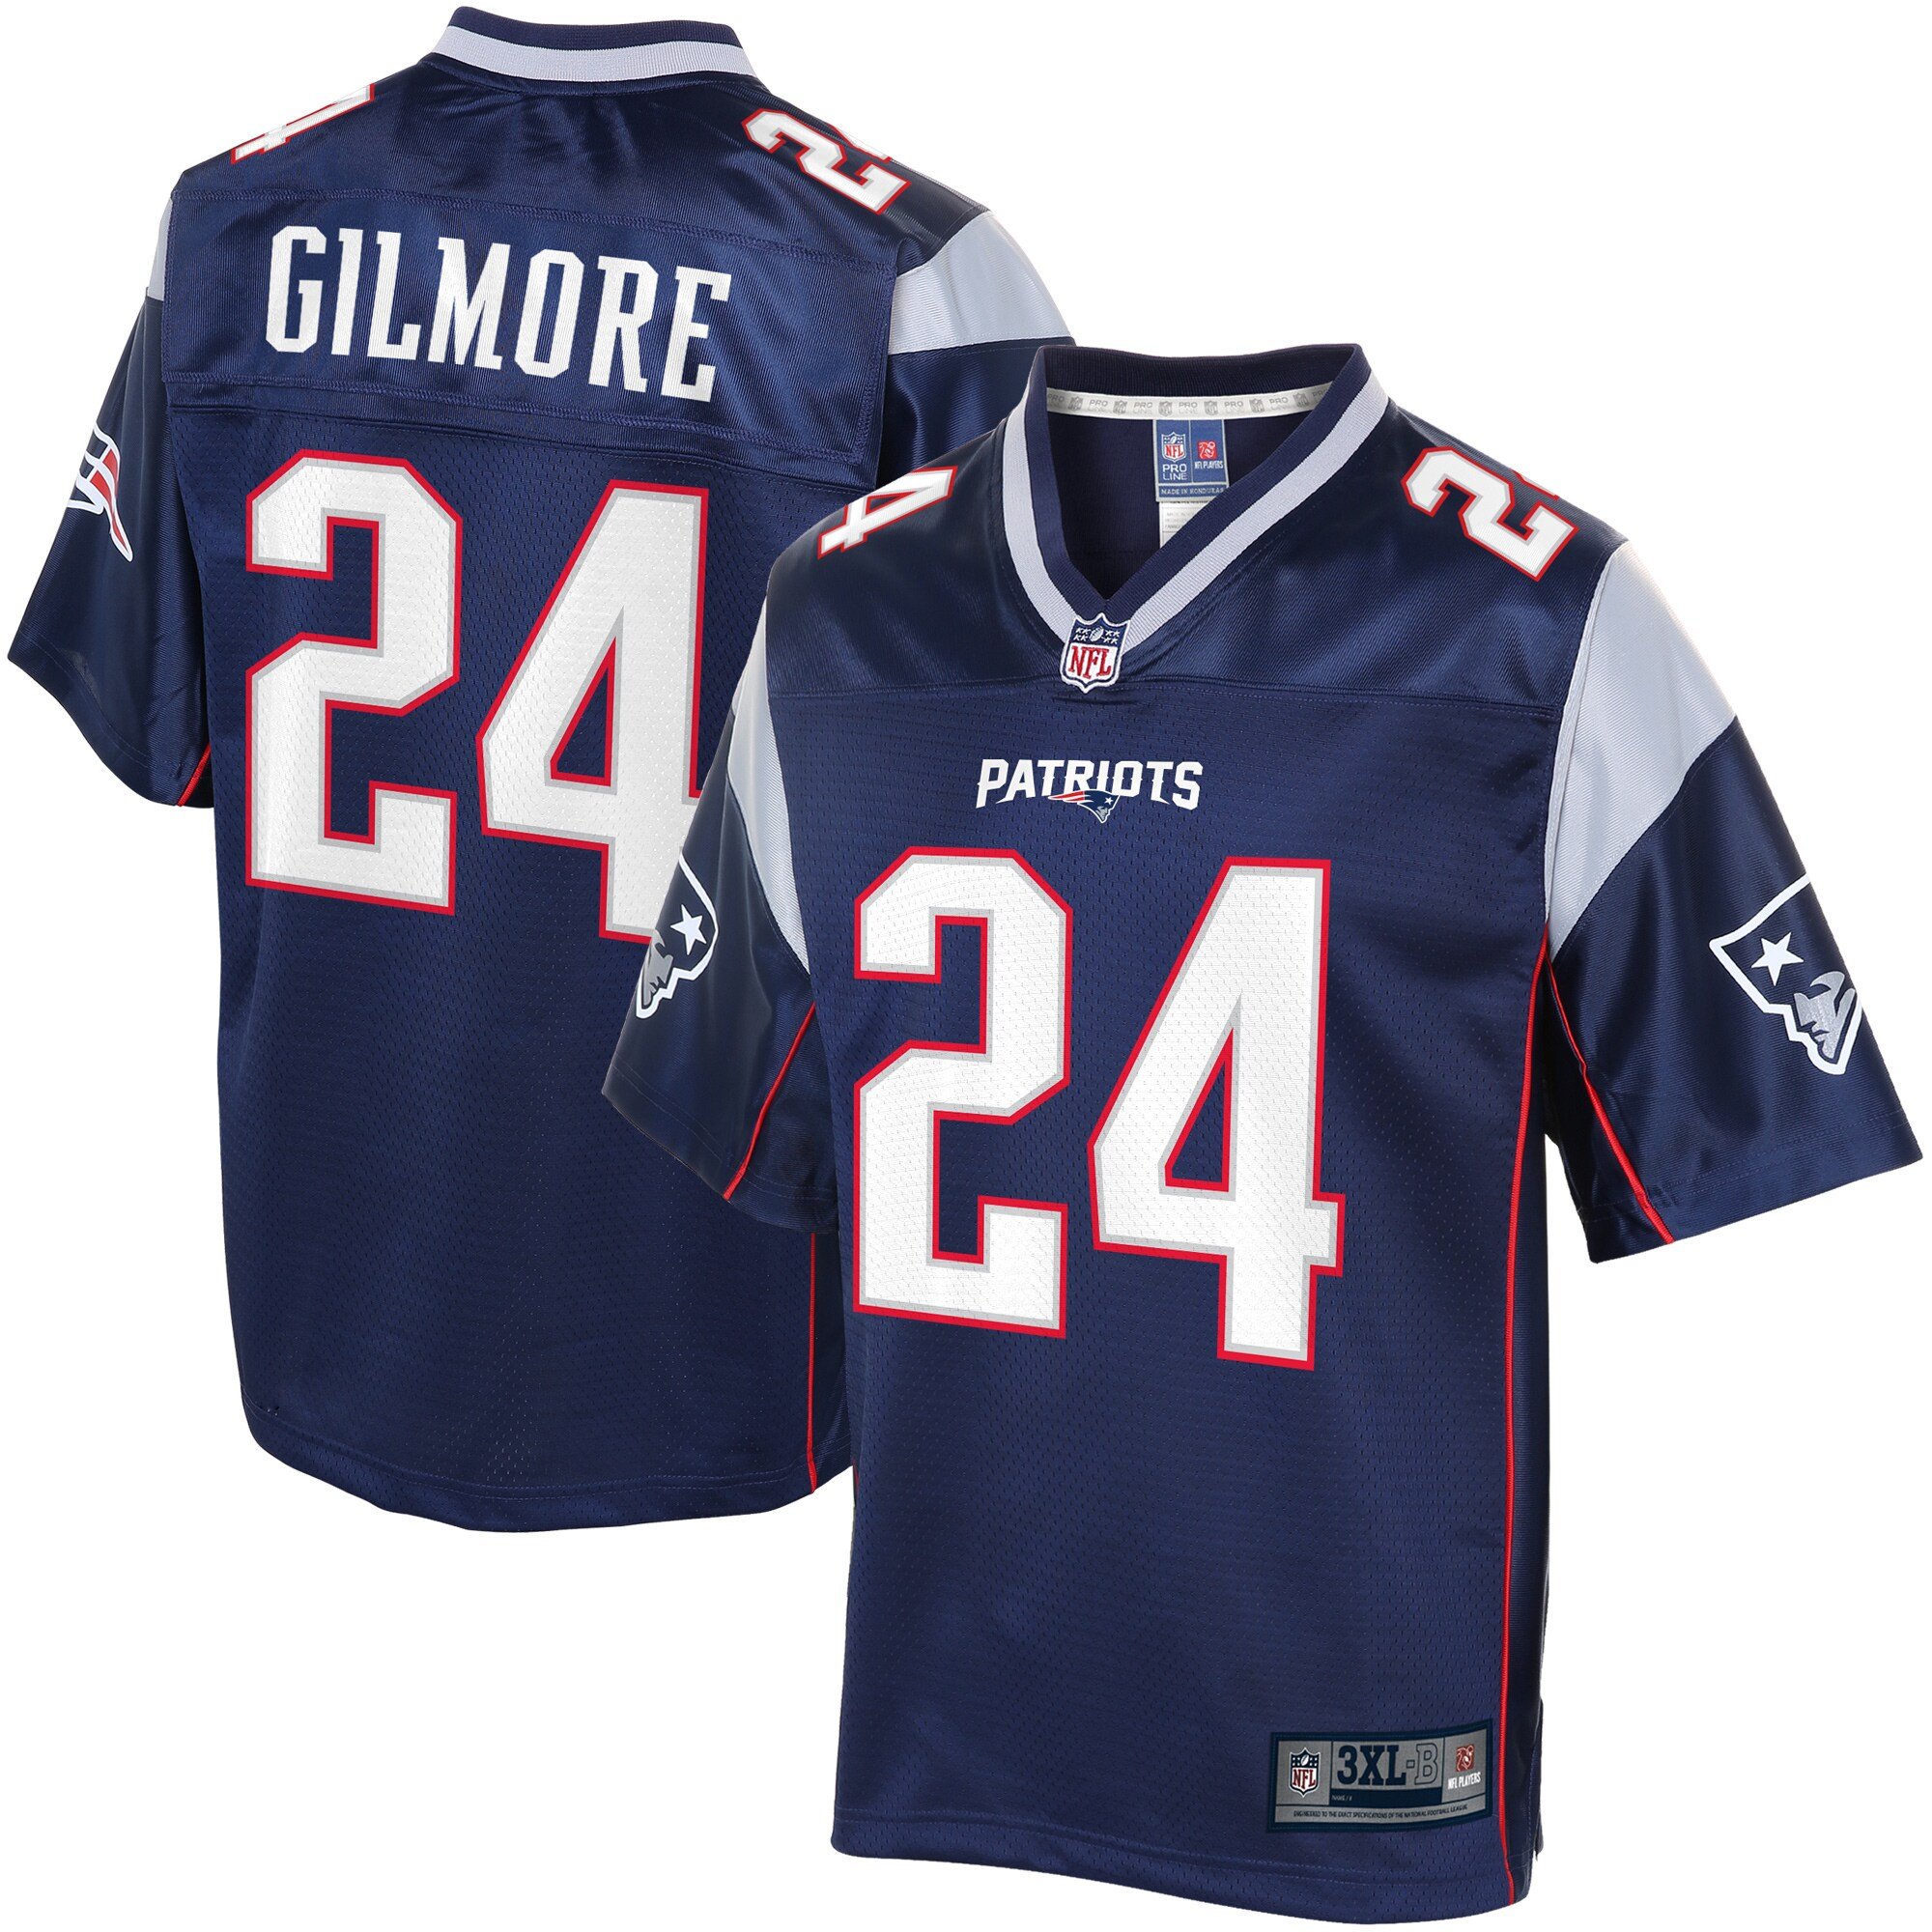 Stephon Gilmore New England Patriots NFL Pro Line Big Tall ...